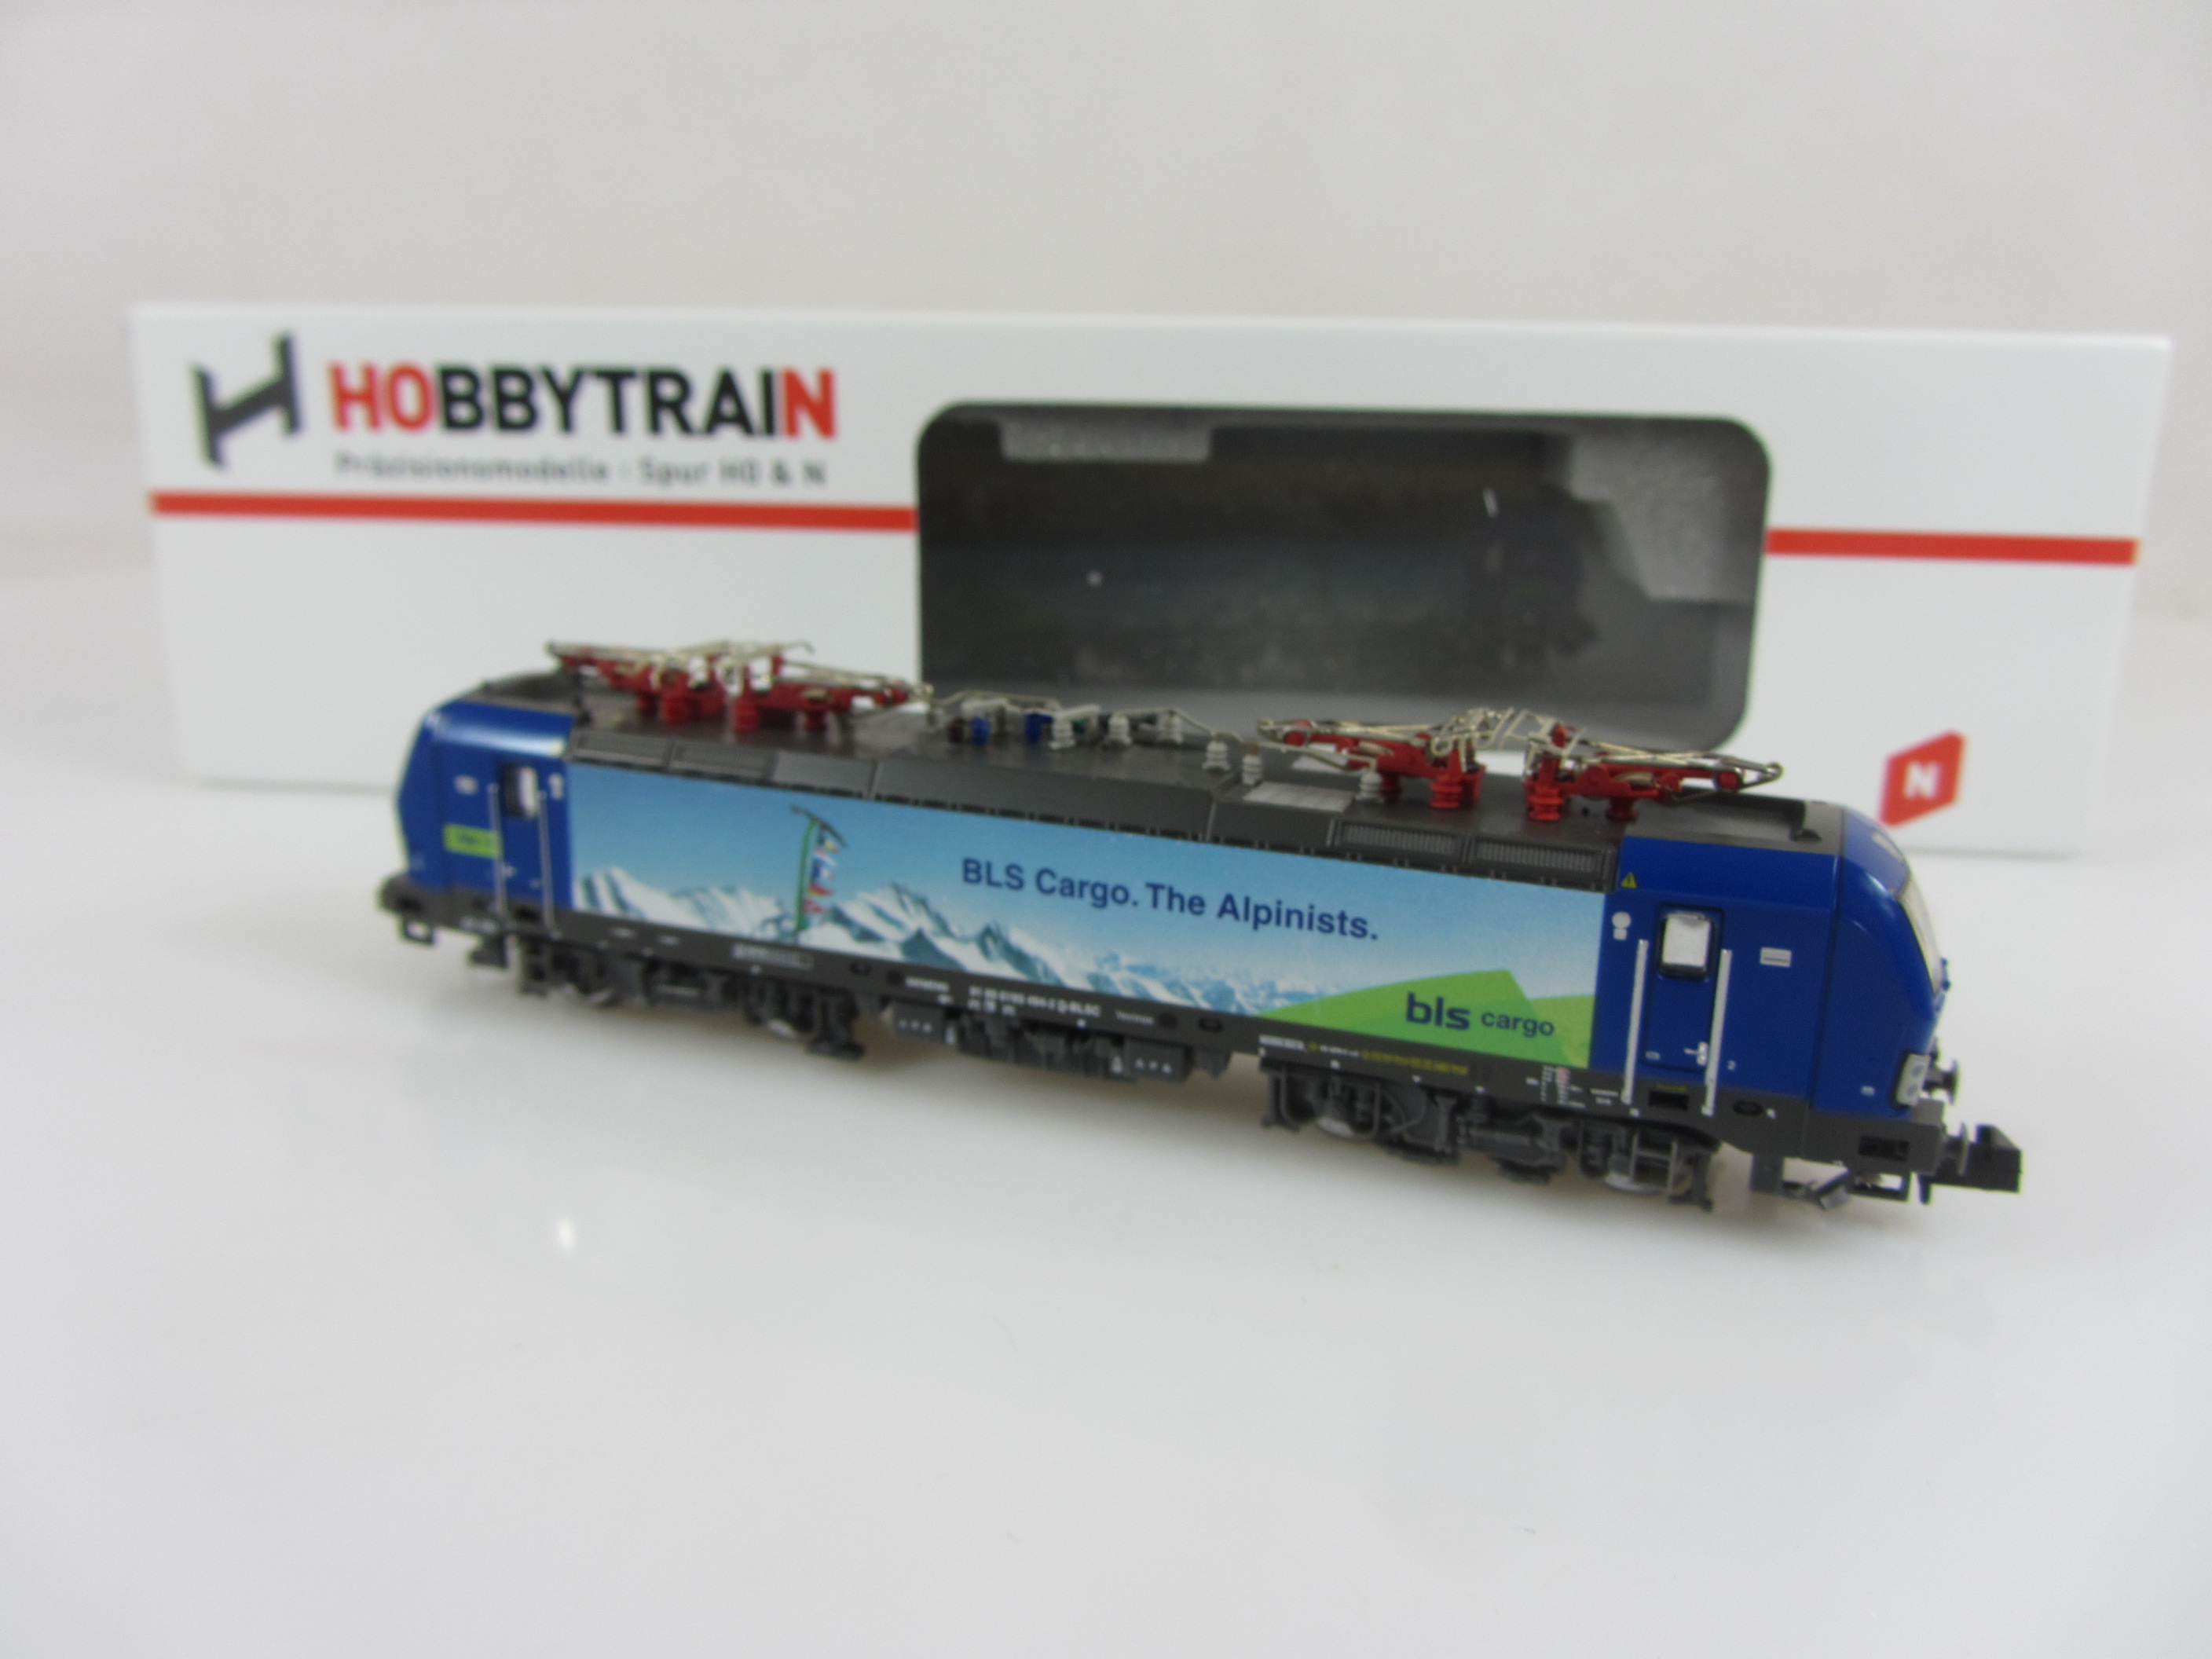 Hobbytrain Hobbytrain h2998 